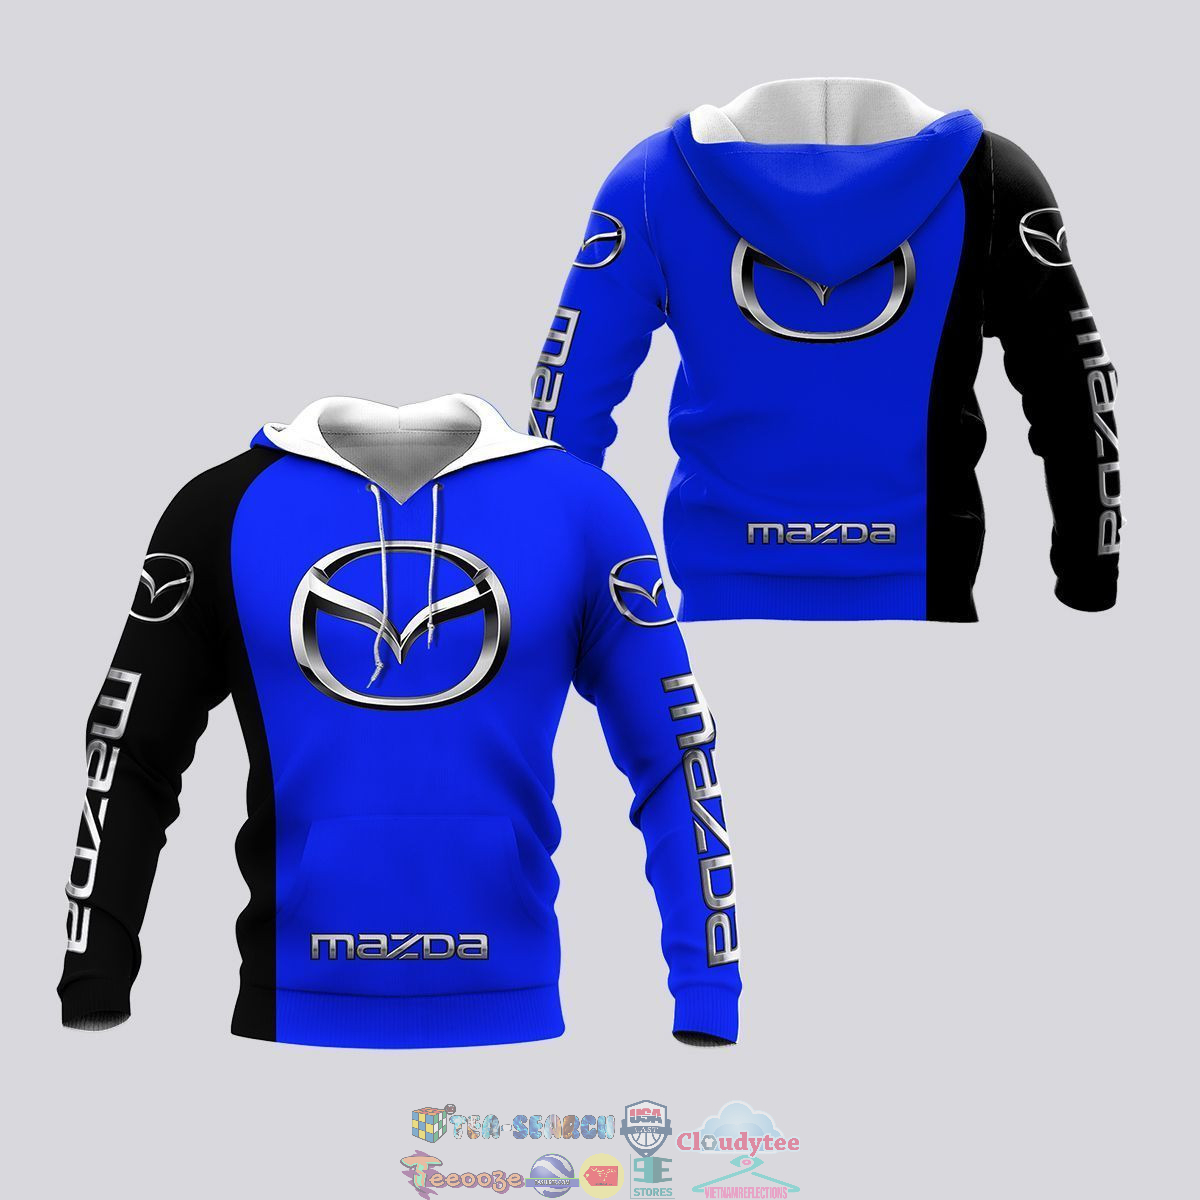 Mazda ver 4 hoodie and t-shirt – Saleoff